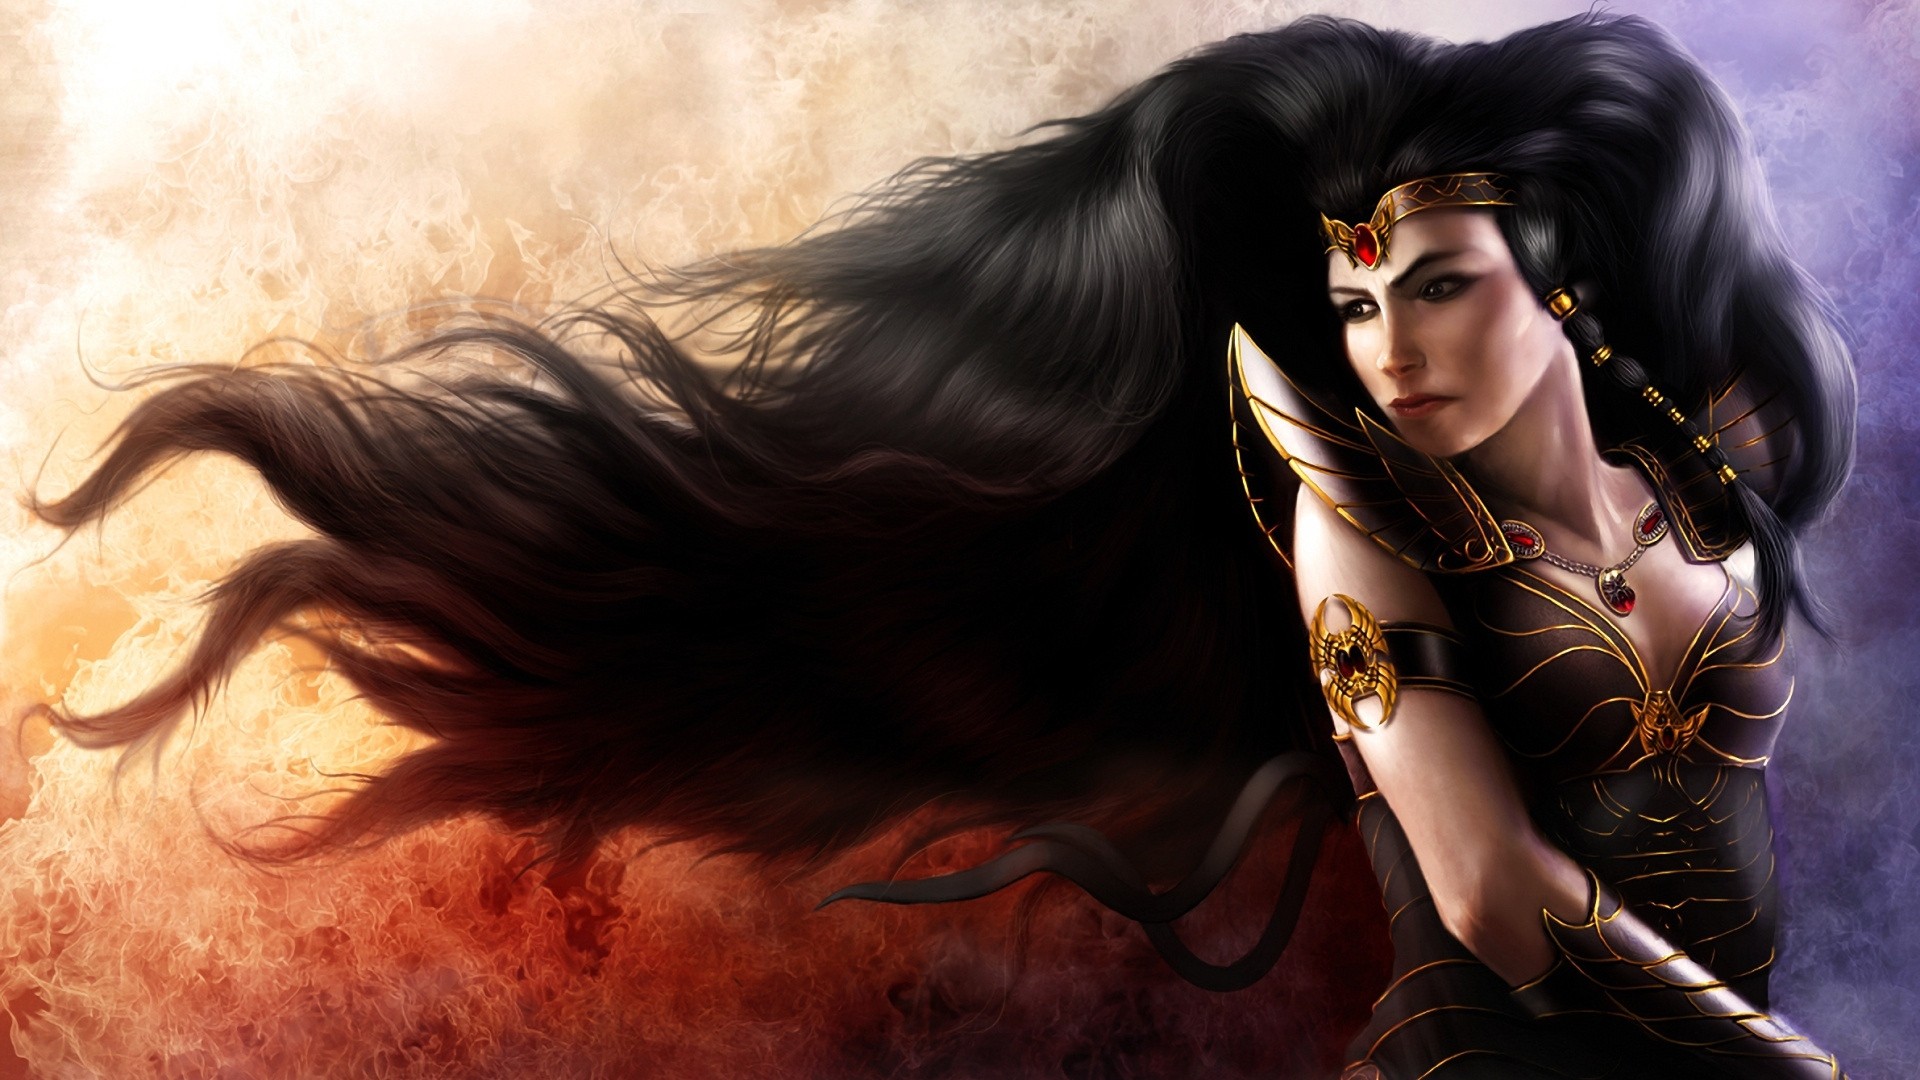 General 1920x1080 fantasy art fantasy girl dark hair artwork long hair necklace Wonder Woman looking away